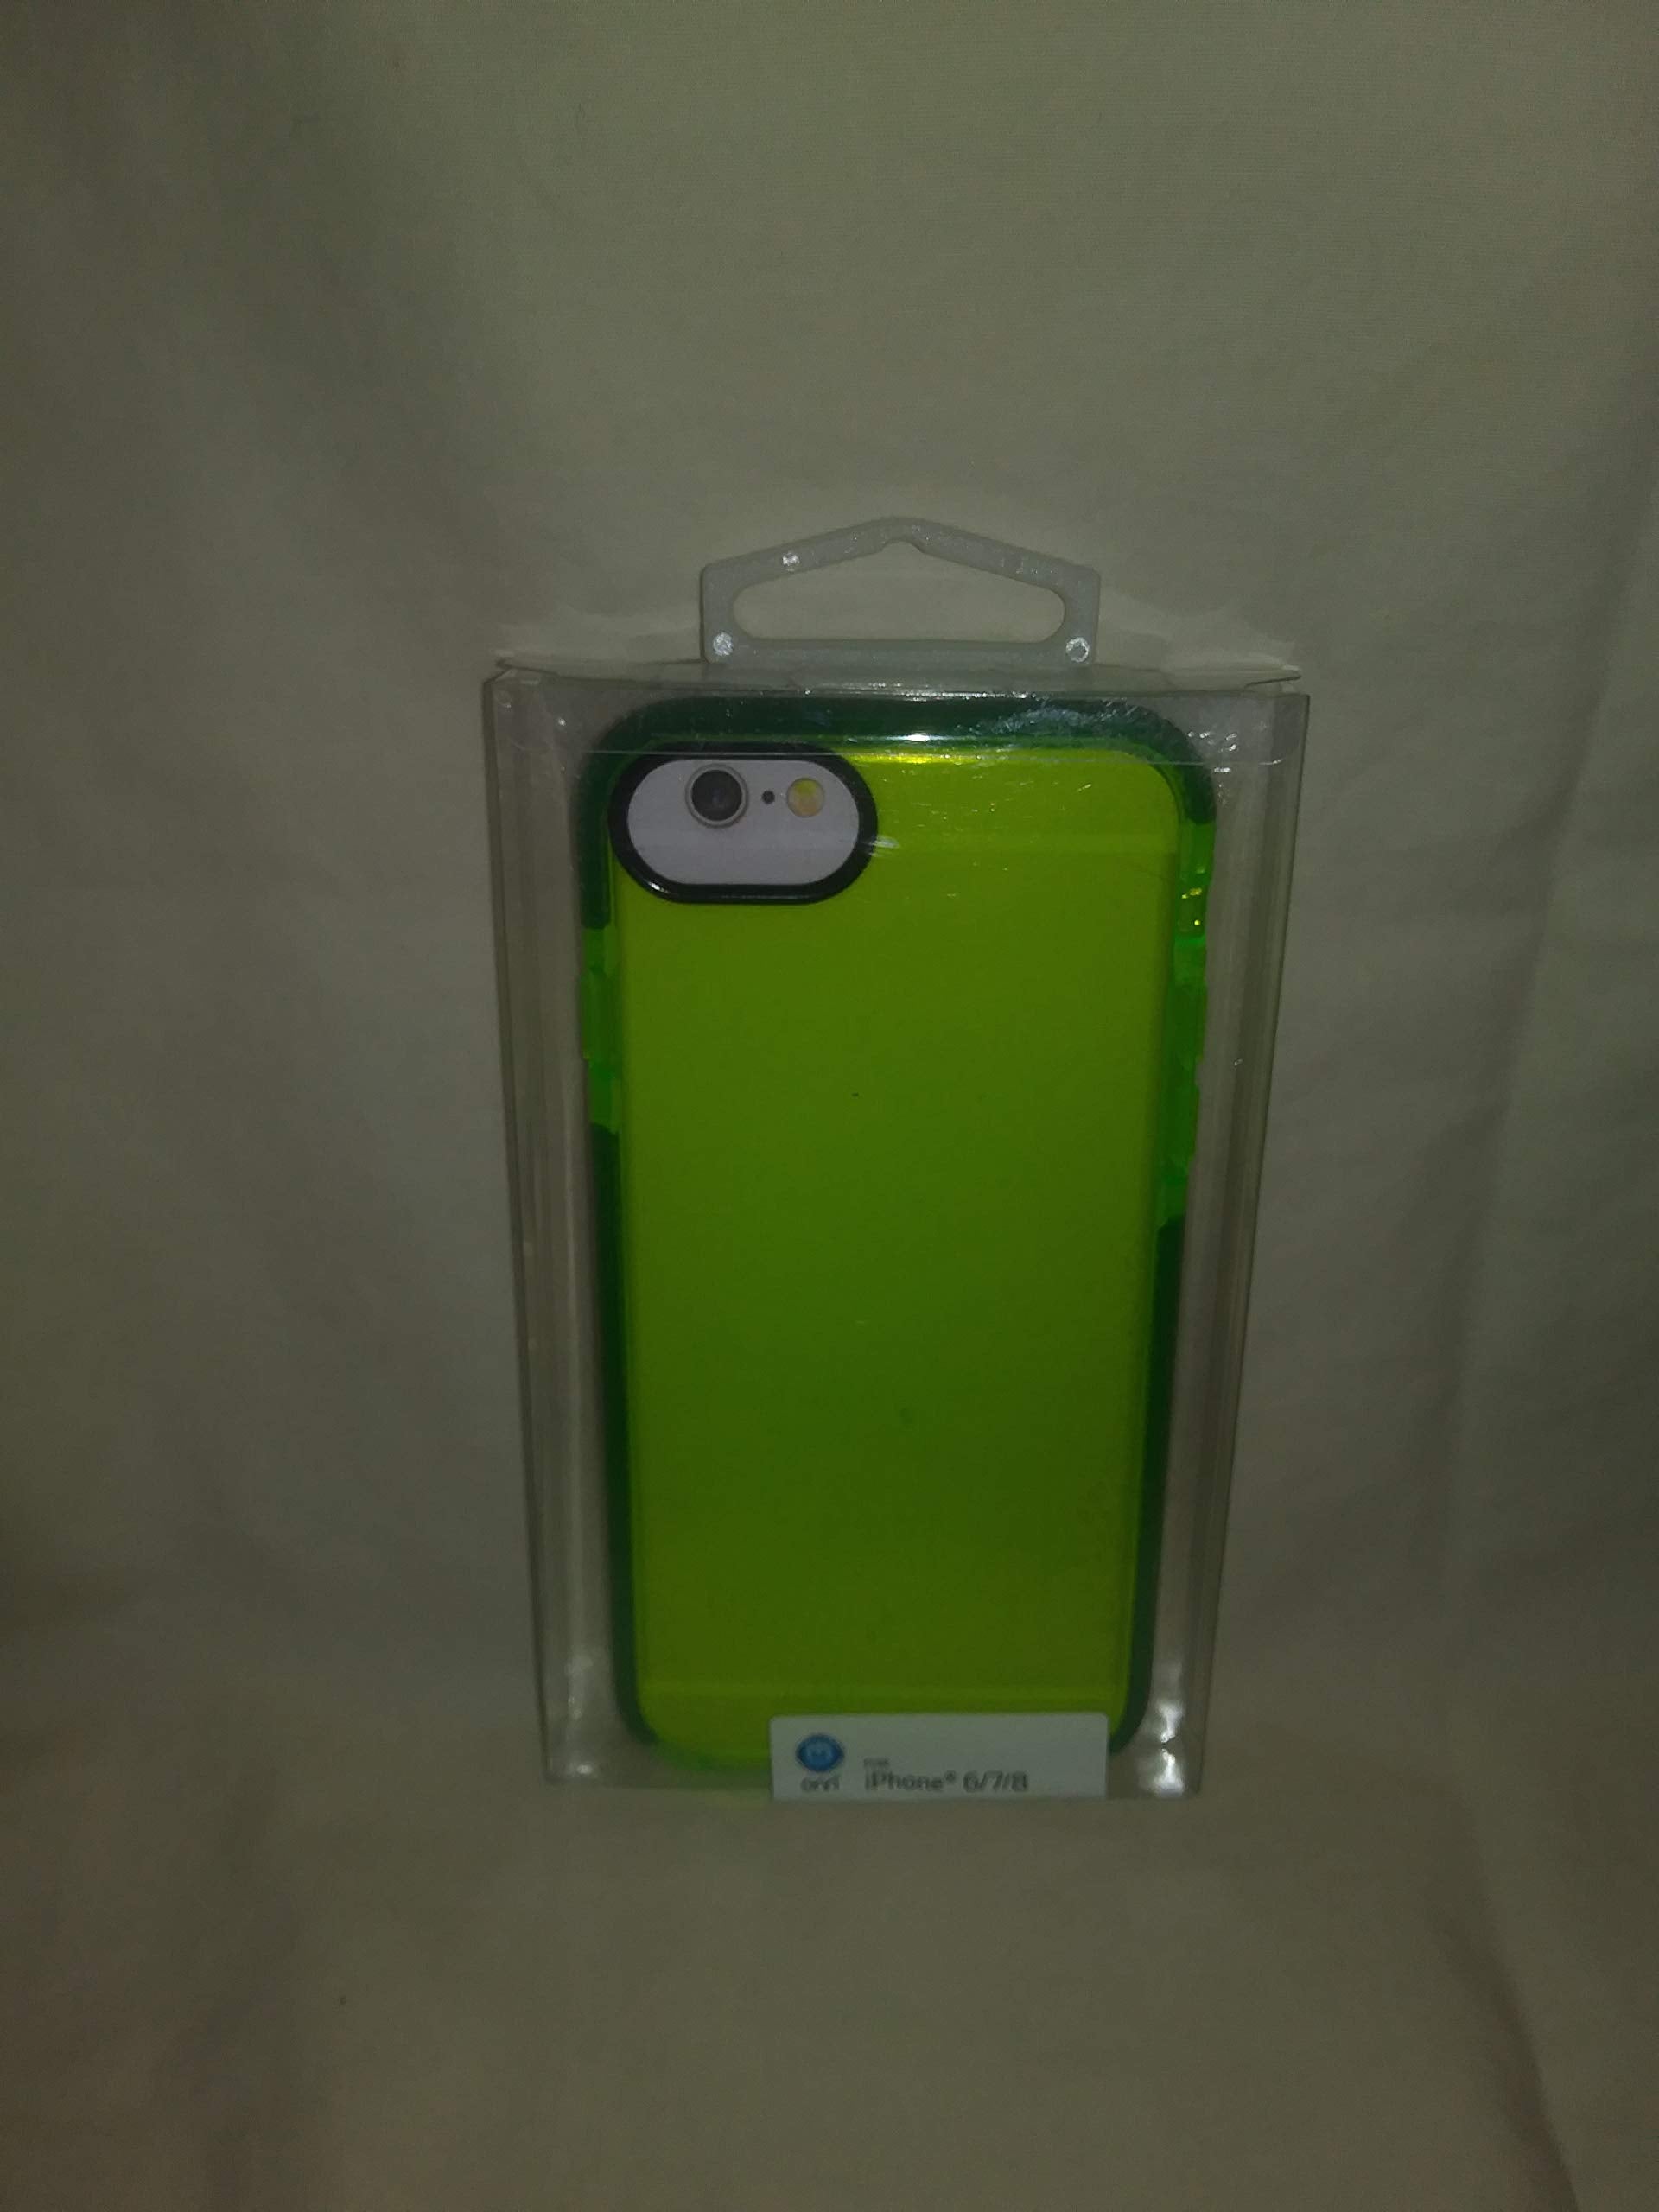 Onn iPhone 6/7/8 Gel Case Green  - Like New